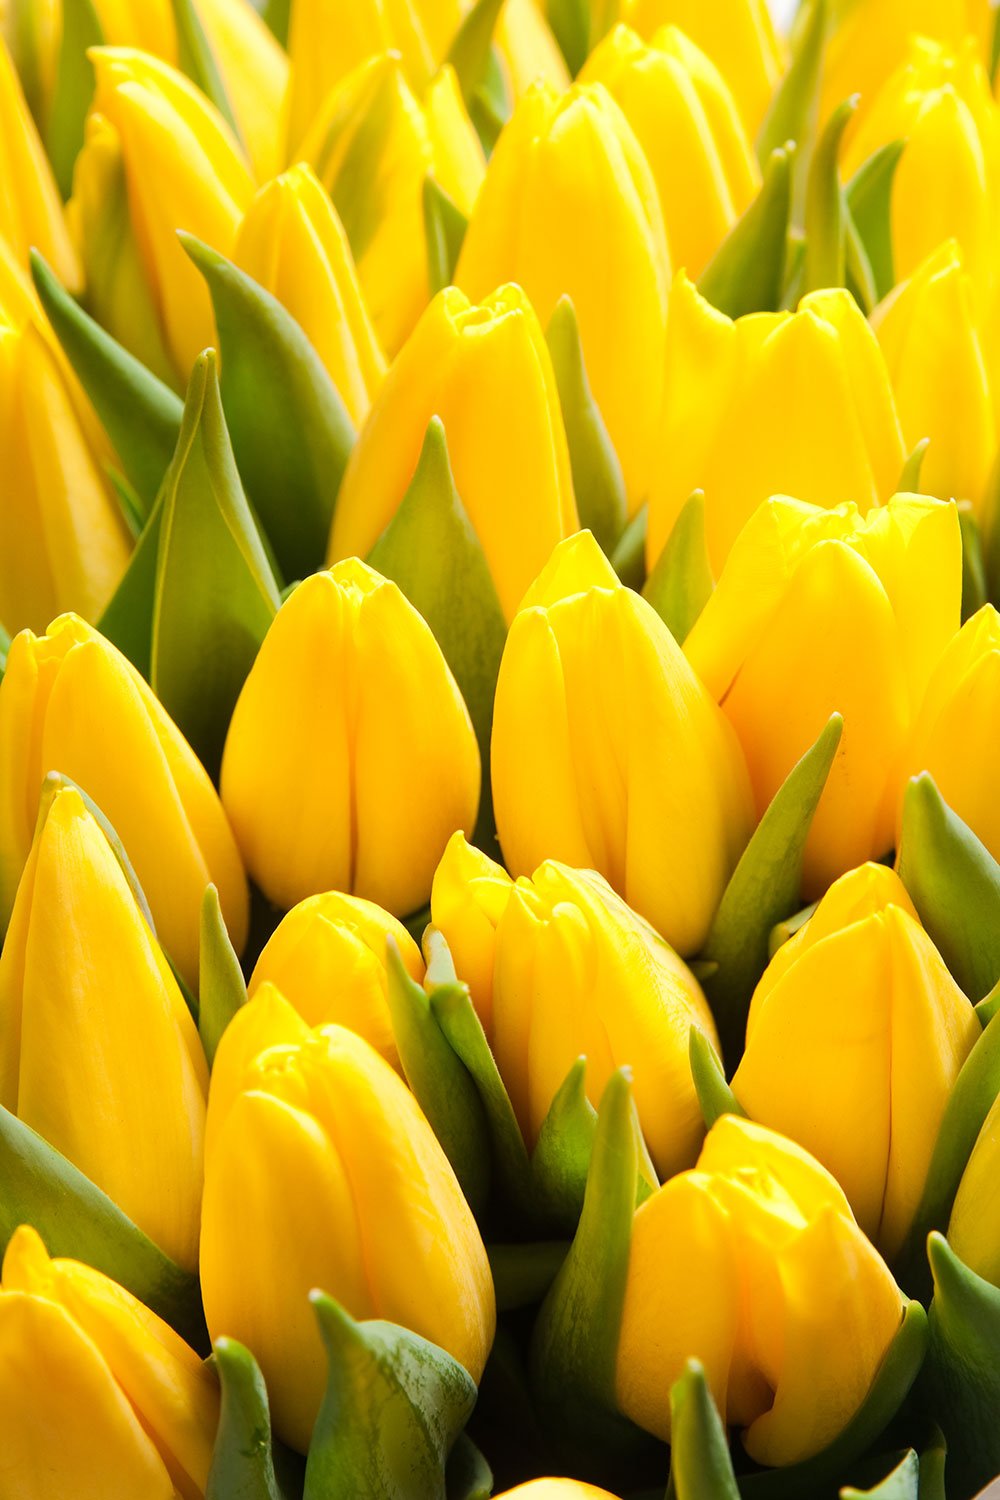 yellow tulip wallpaper